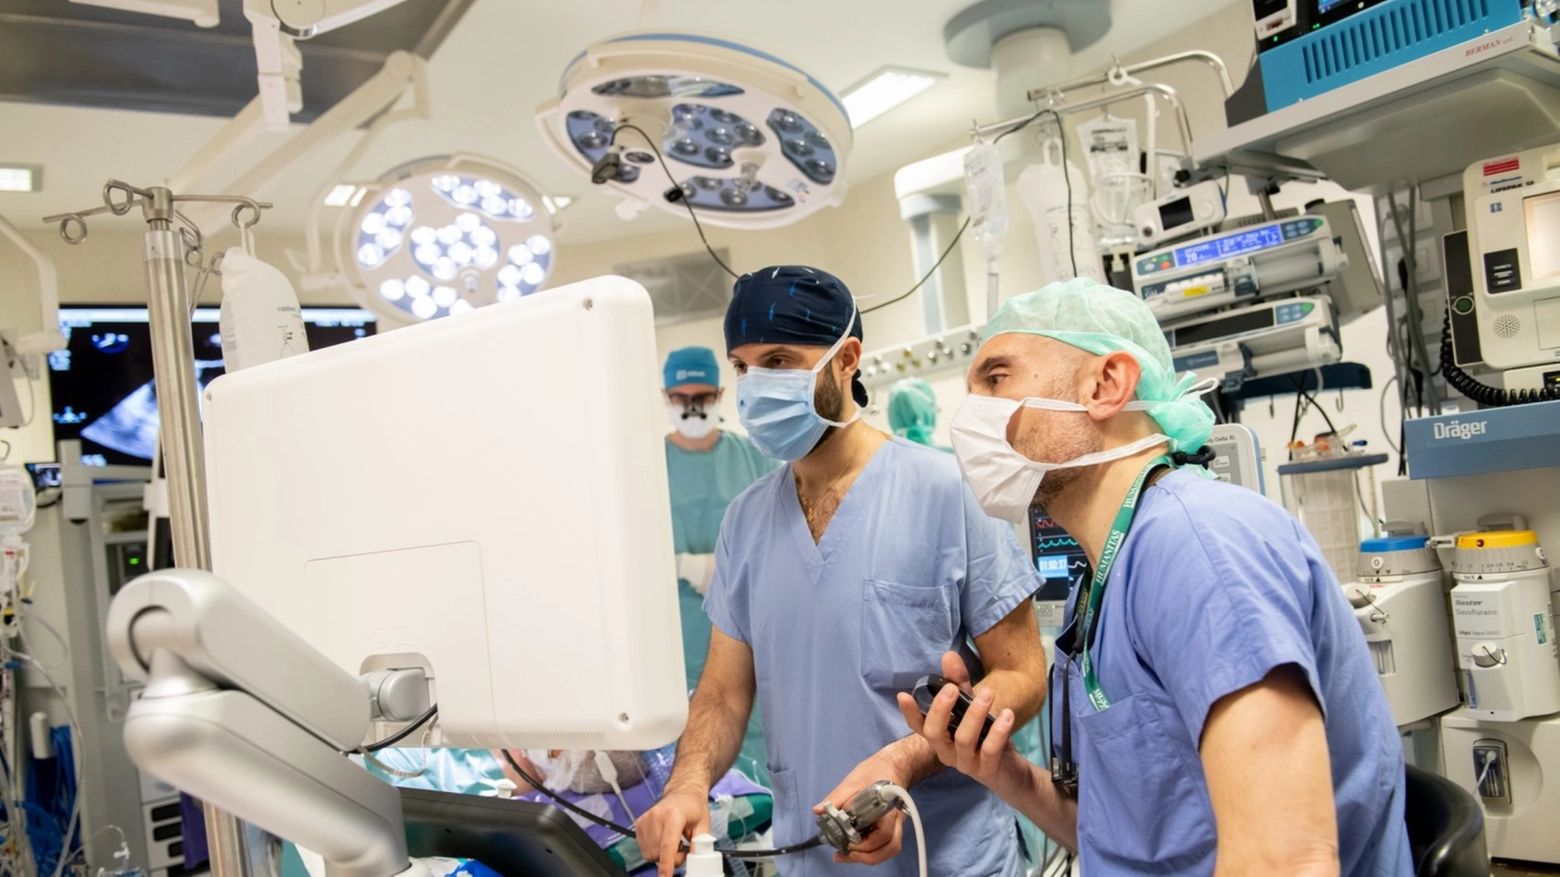 Alfonso Agnino, cardiochirurgo, sulla destra; Claudio Roscitano, anestesista, a sinistra